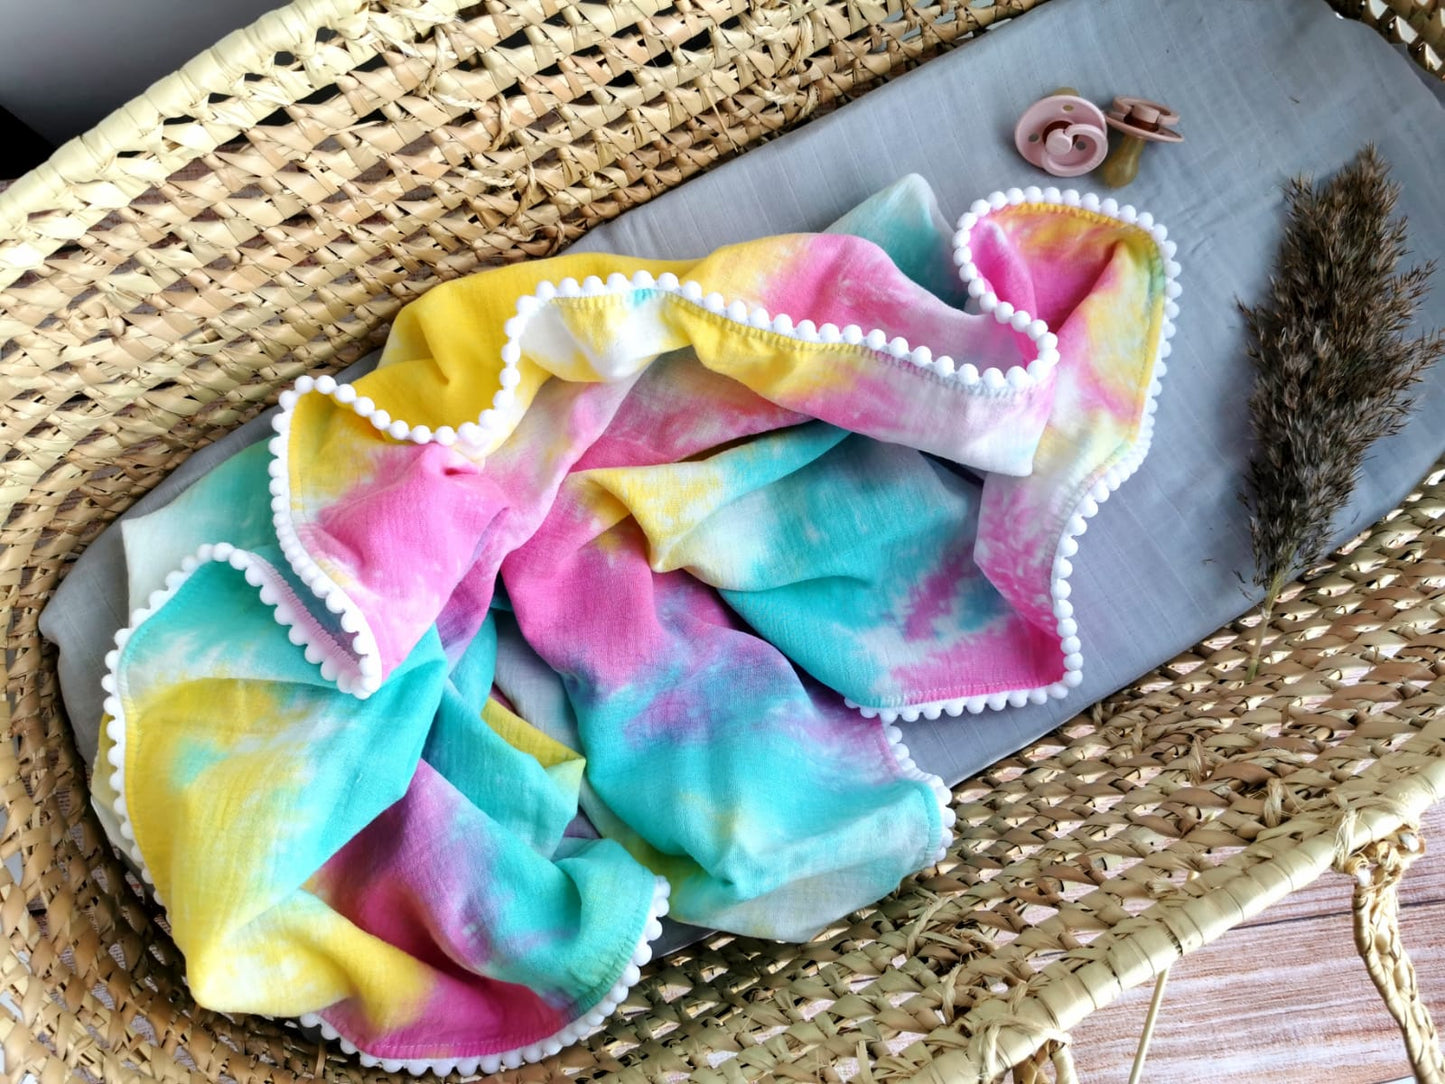 Organic Cotton muslin Pom Pom swaddle blanket - bright pastel colors